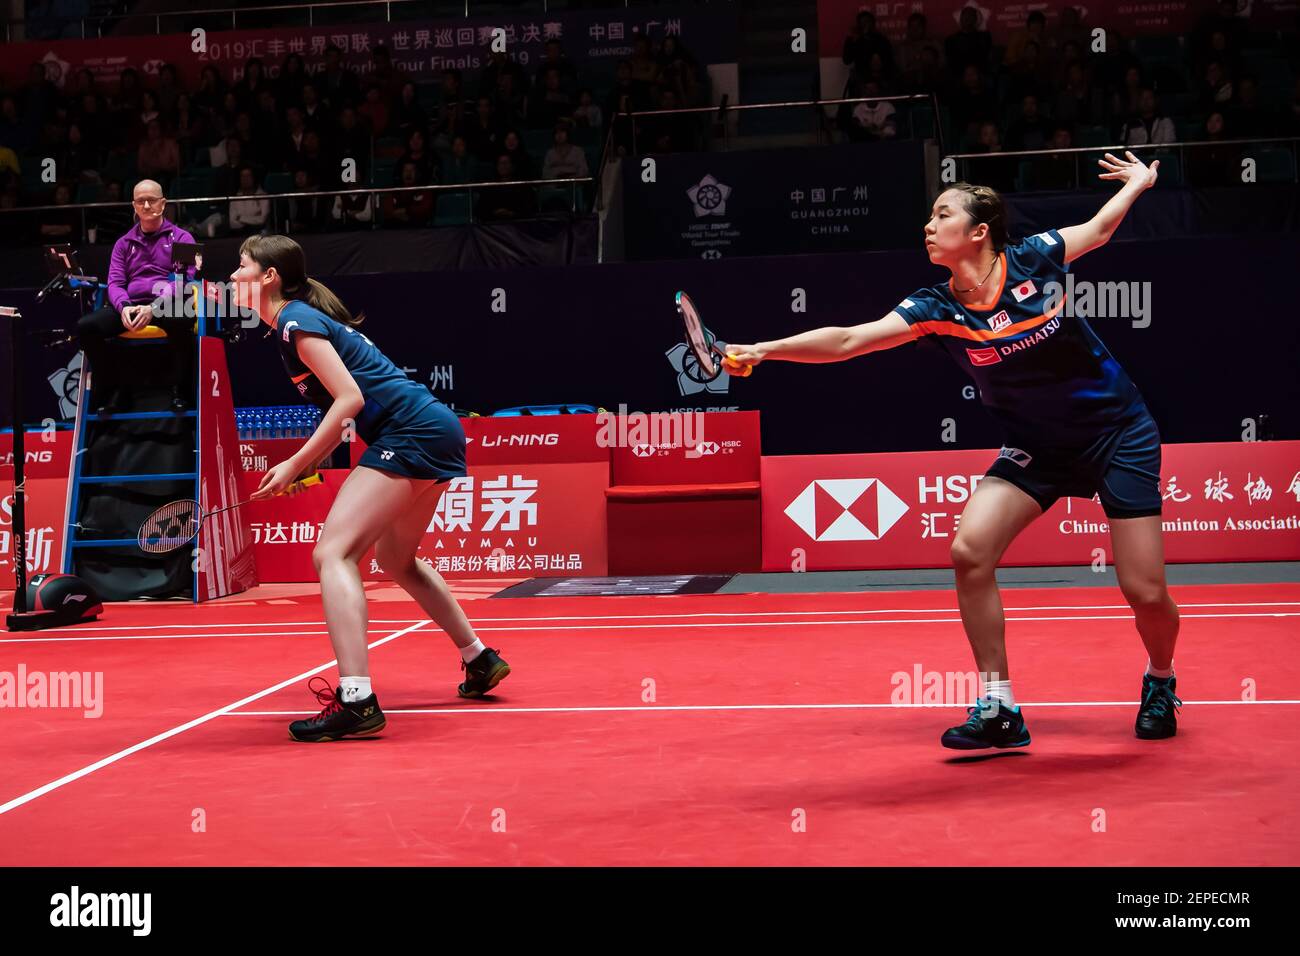 Japanese professional badminton players Mayu Matsumoto and Wakana Nagahara  compete against Thai professional badminton players Jongkolphan  Kititharakul and Rawinda Prajongjai at the group stage of women's doubles  at HSBC BWF World Tour